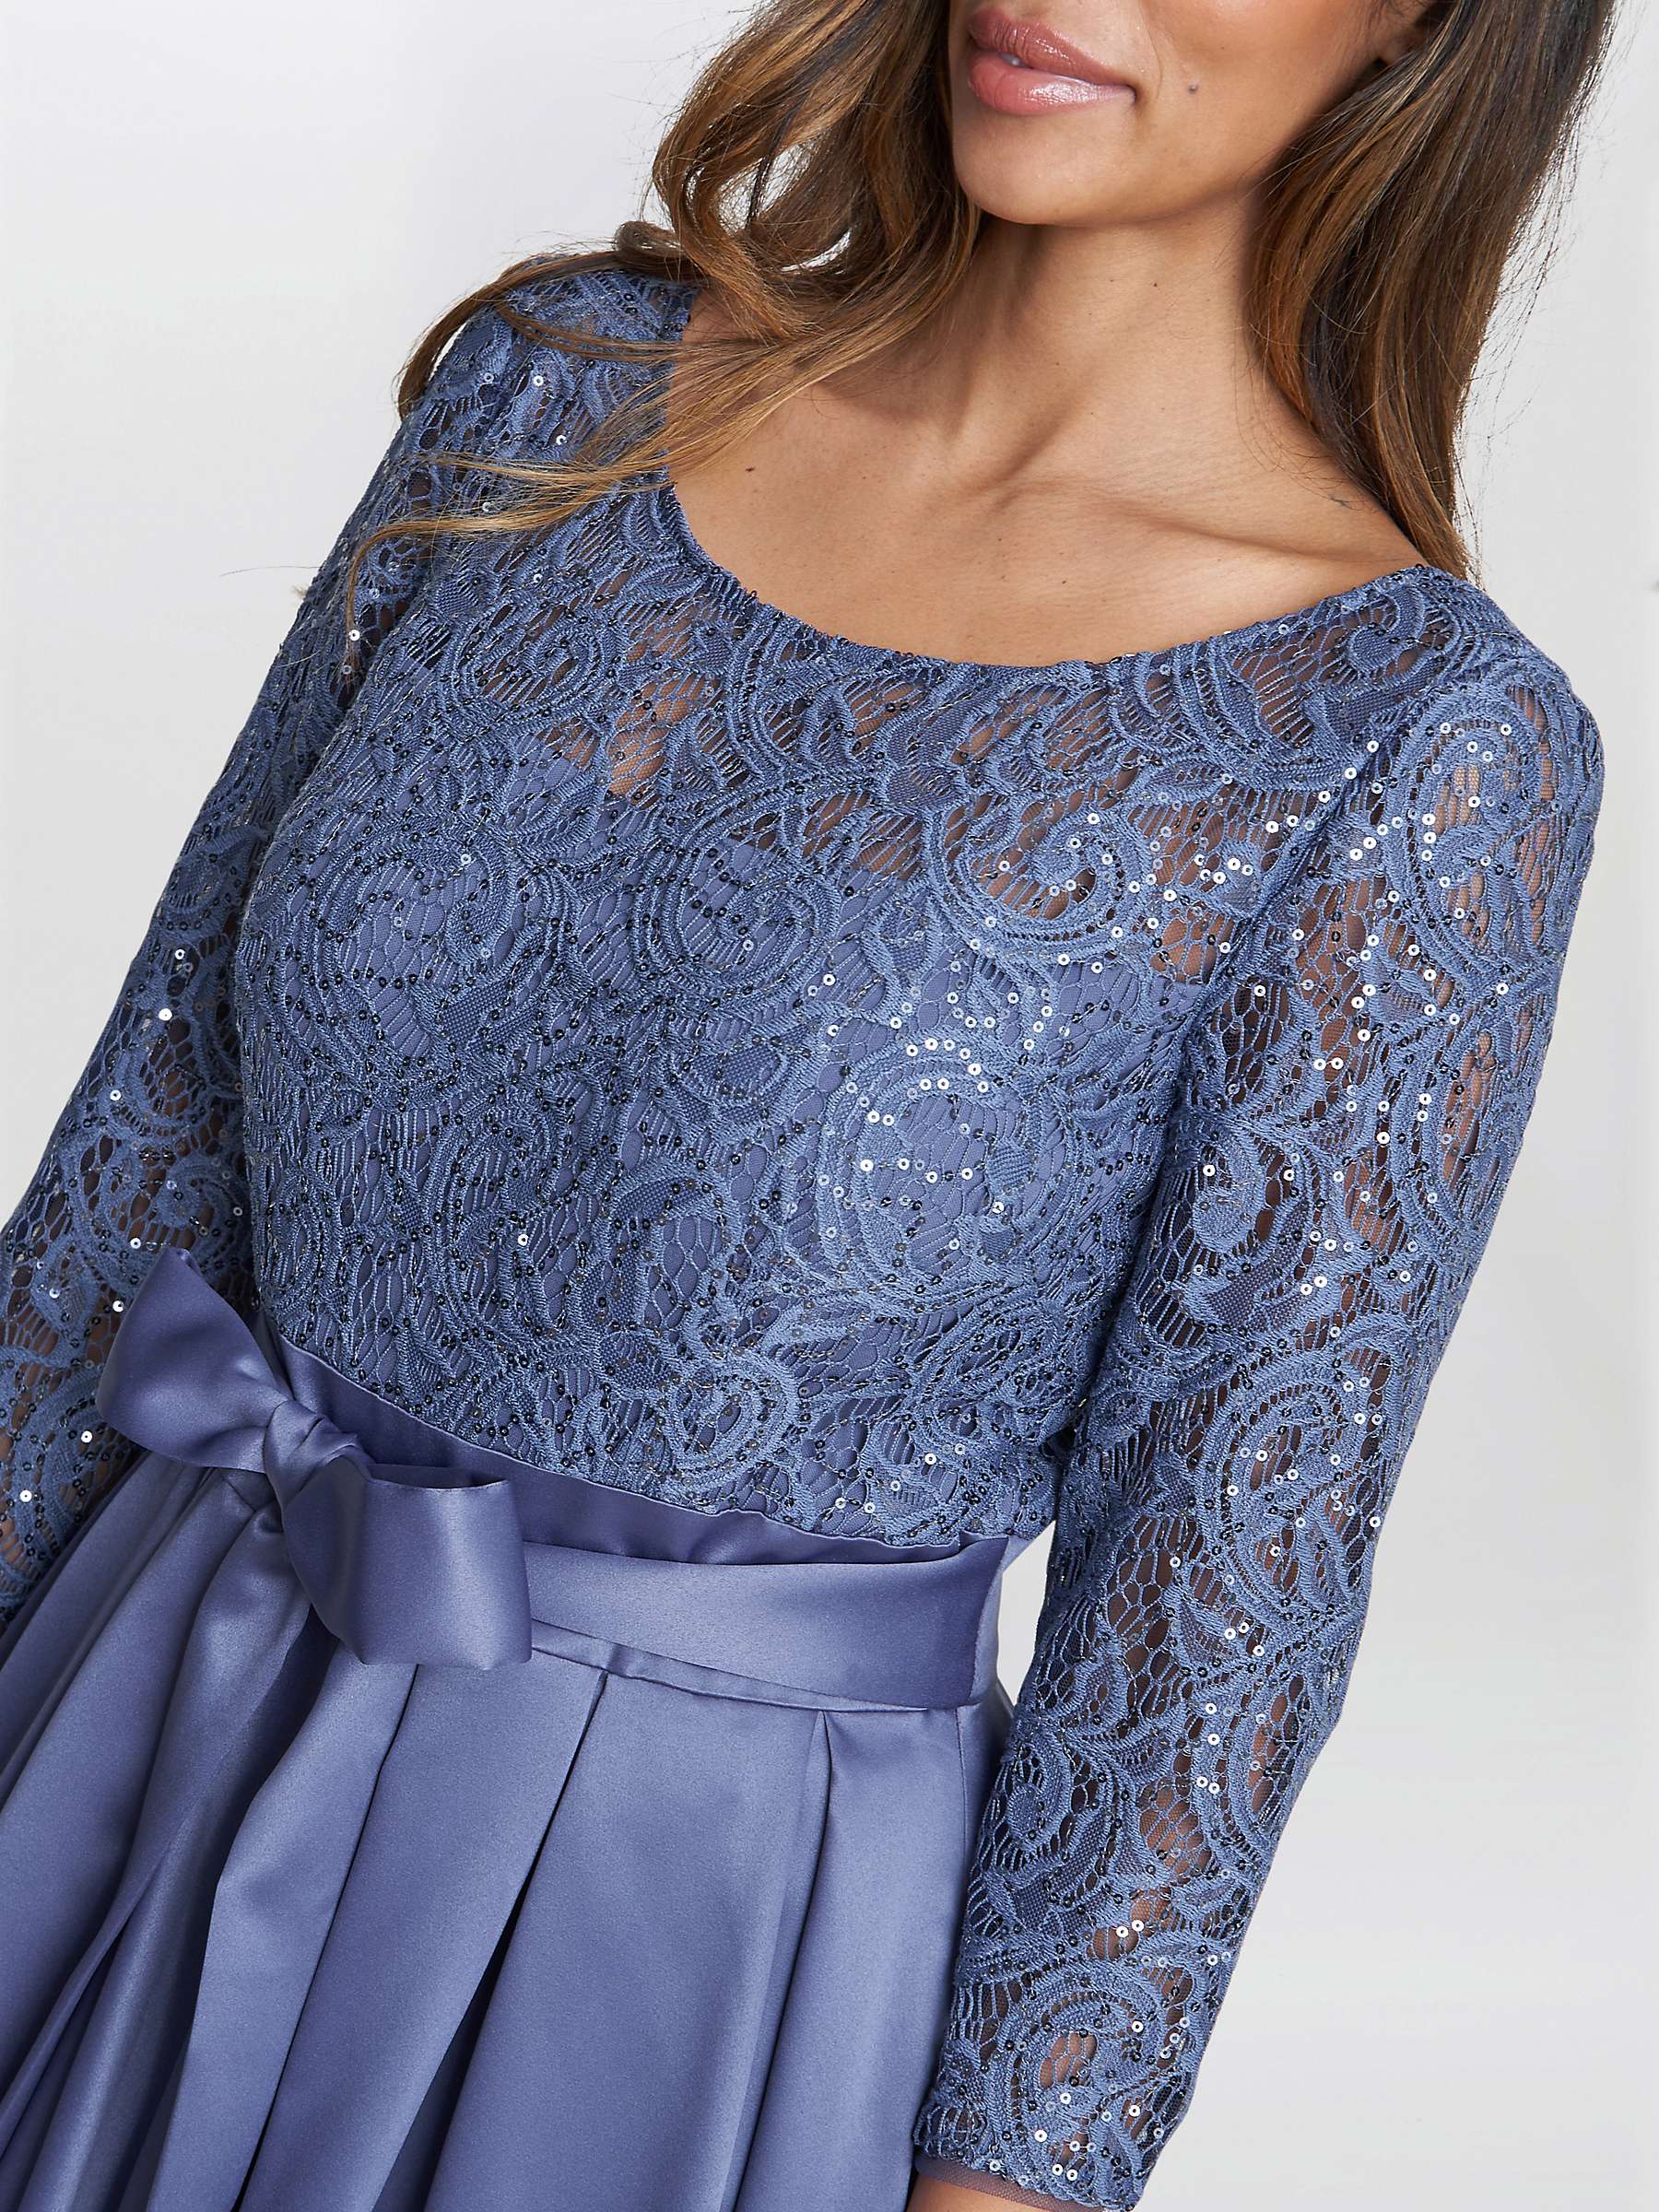 Buy Gina Bacconi Lace Bodice Satin Skirt Maxi Dress, Wedgewood Online at johnlewis.com